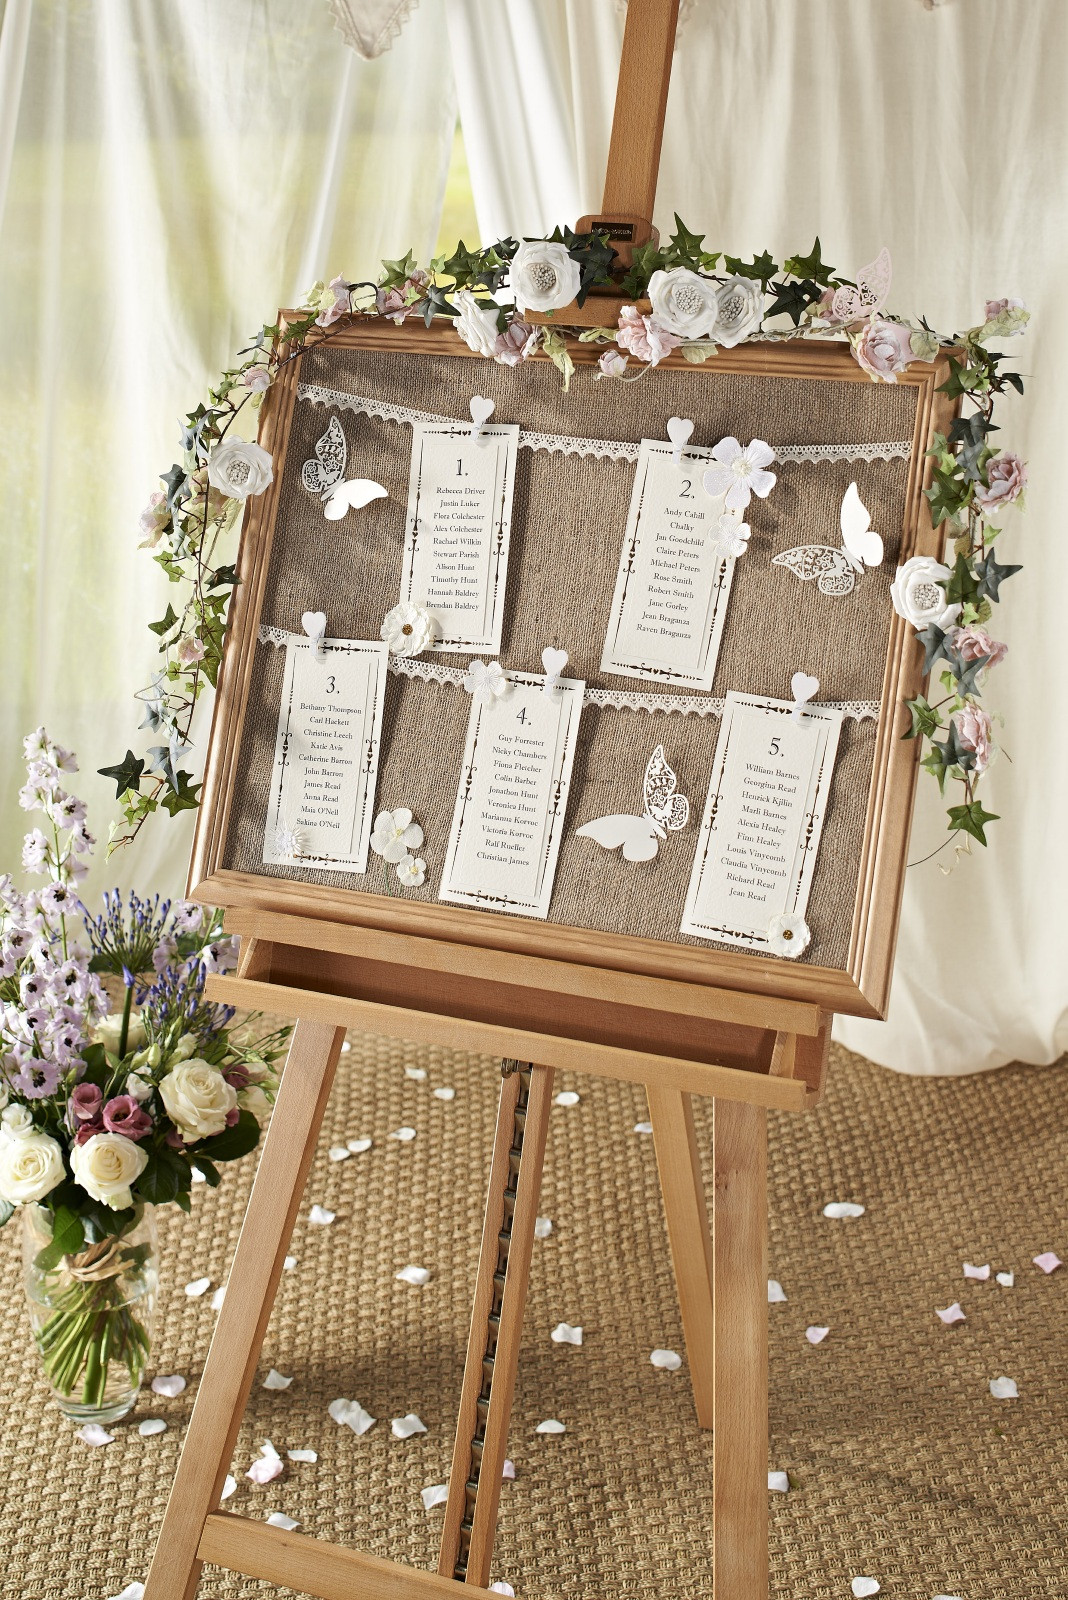 DIY Table Decorations For Weddings
 DIY Vintage Wedding Table Chart Hobbycraft Blog